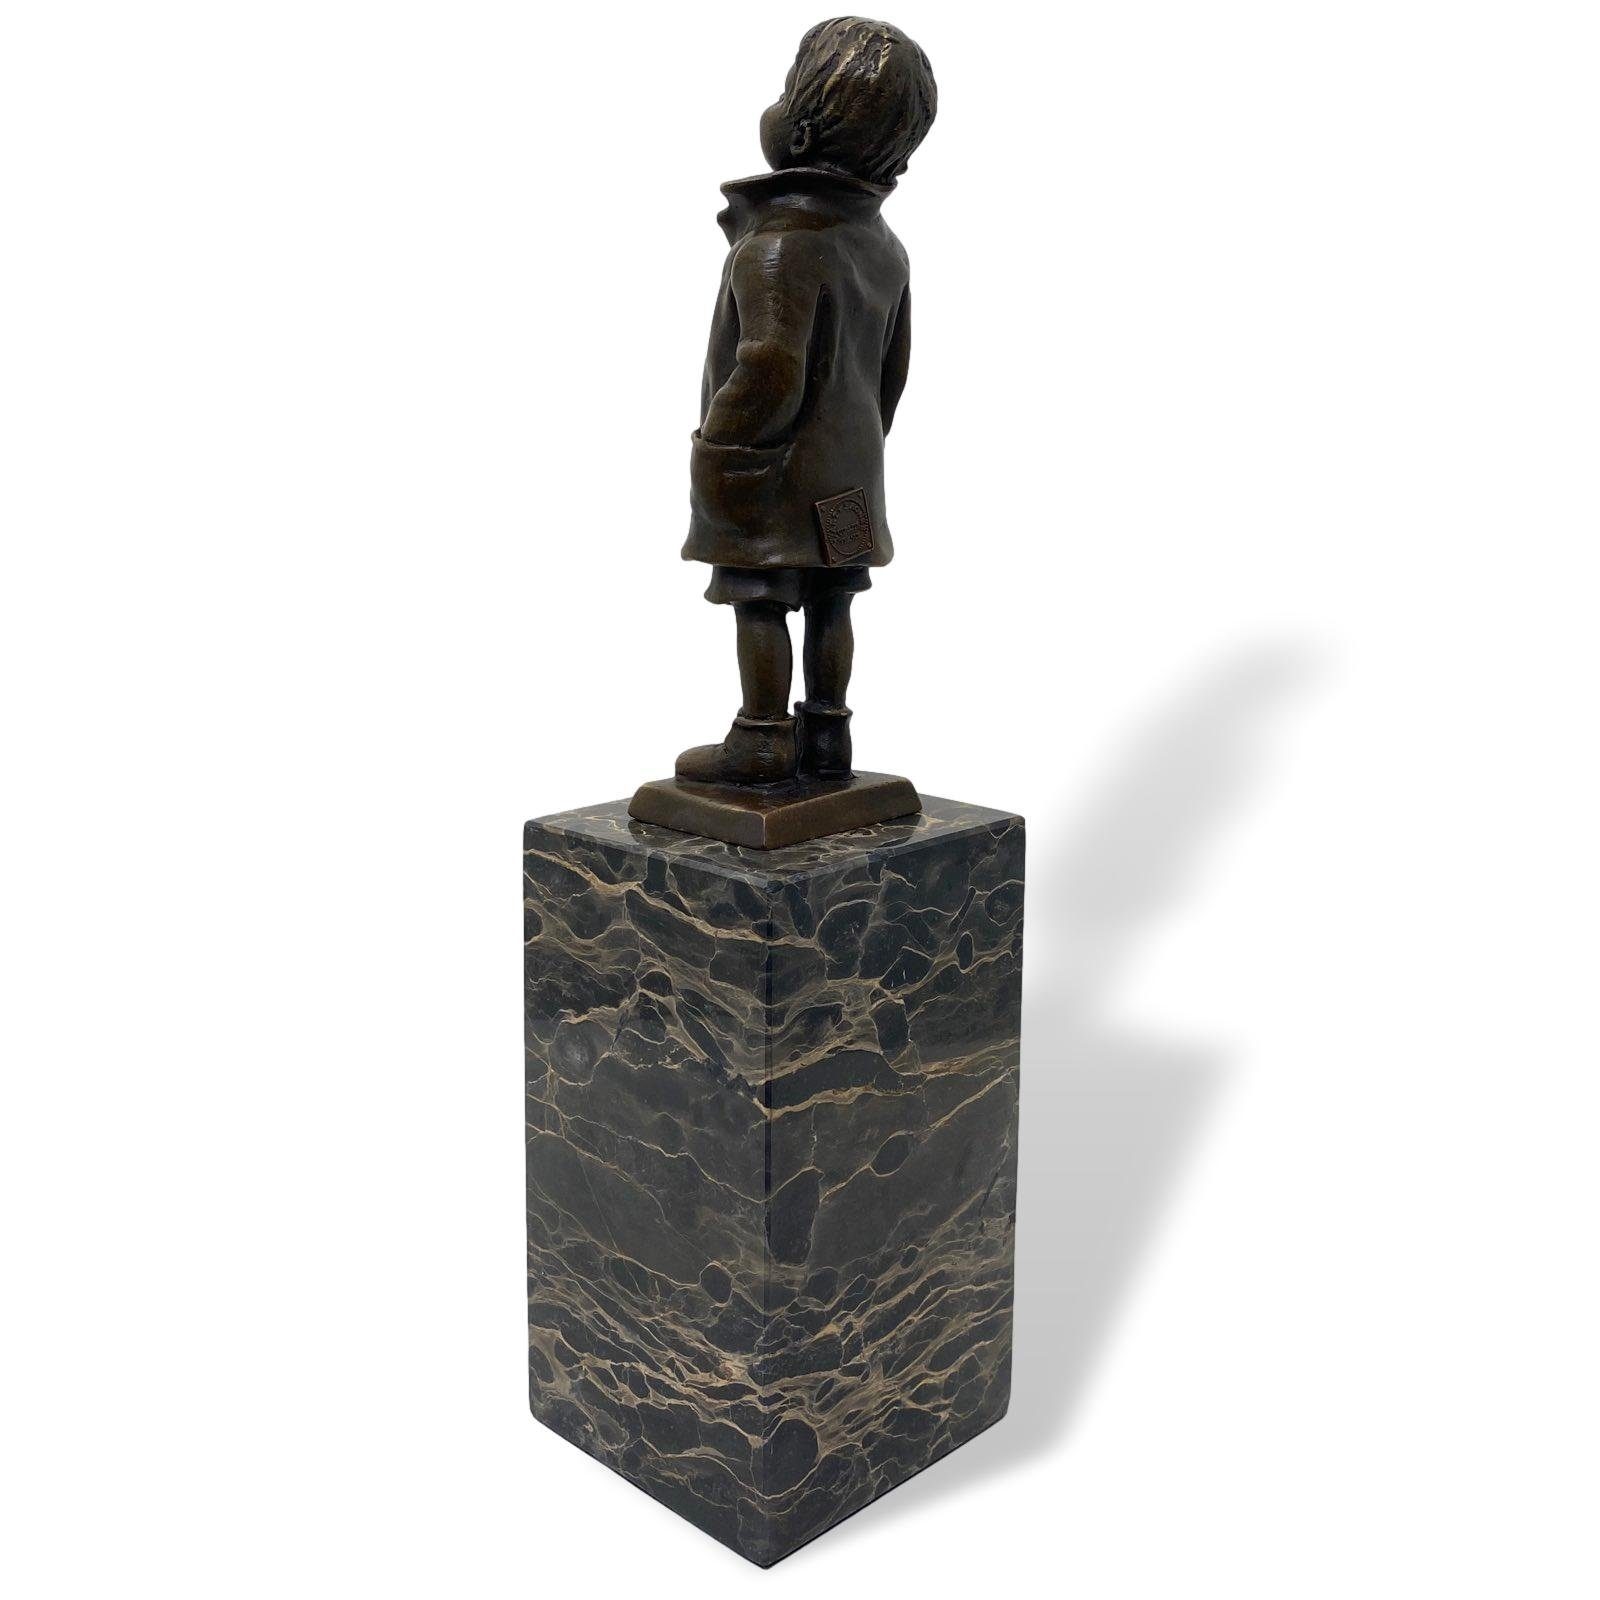 Aubaho Skulptur Bronzeskulptur Bronzefigur Antik-Sti Statue im 28cm Bronze Figur Junge